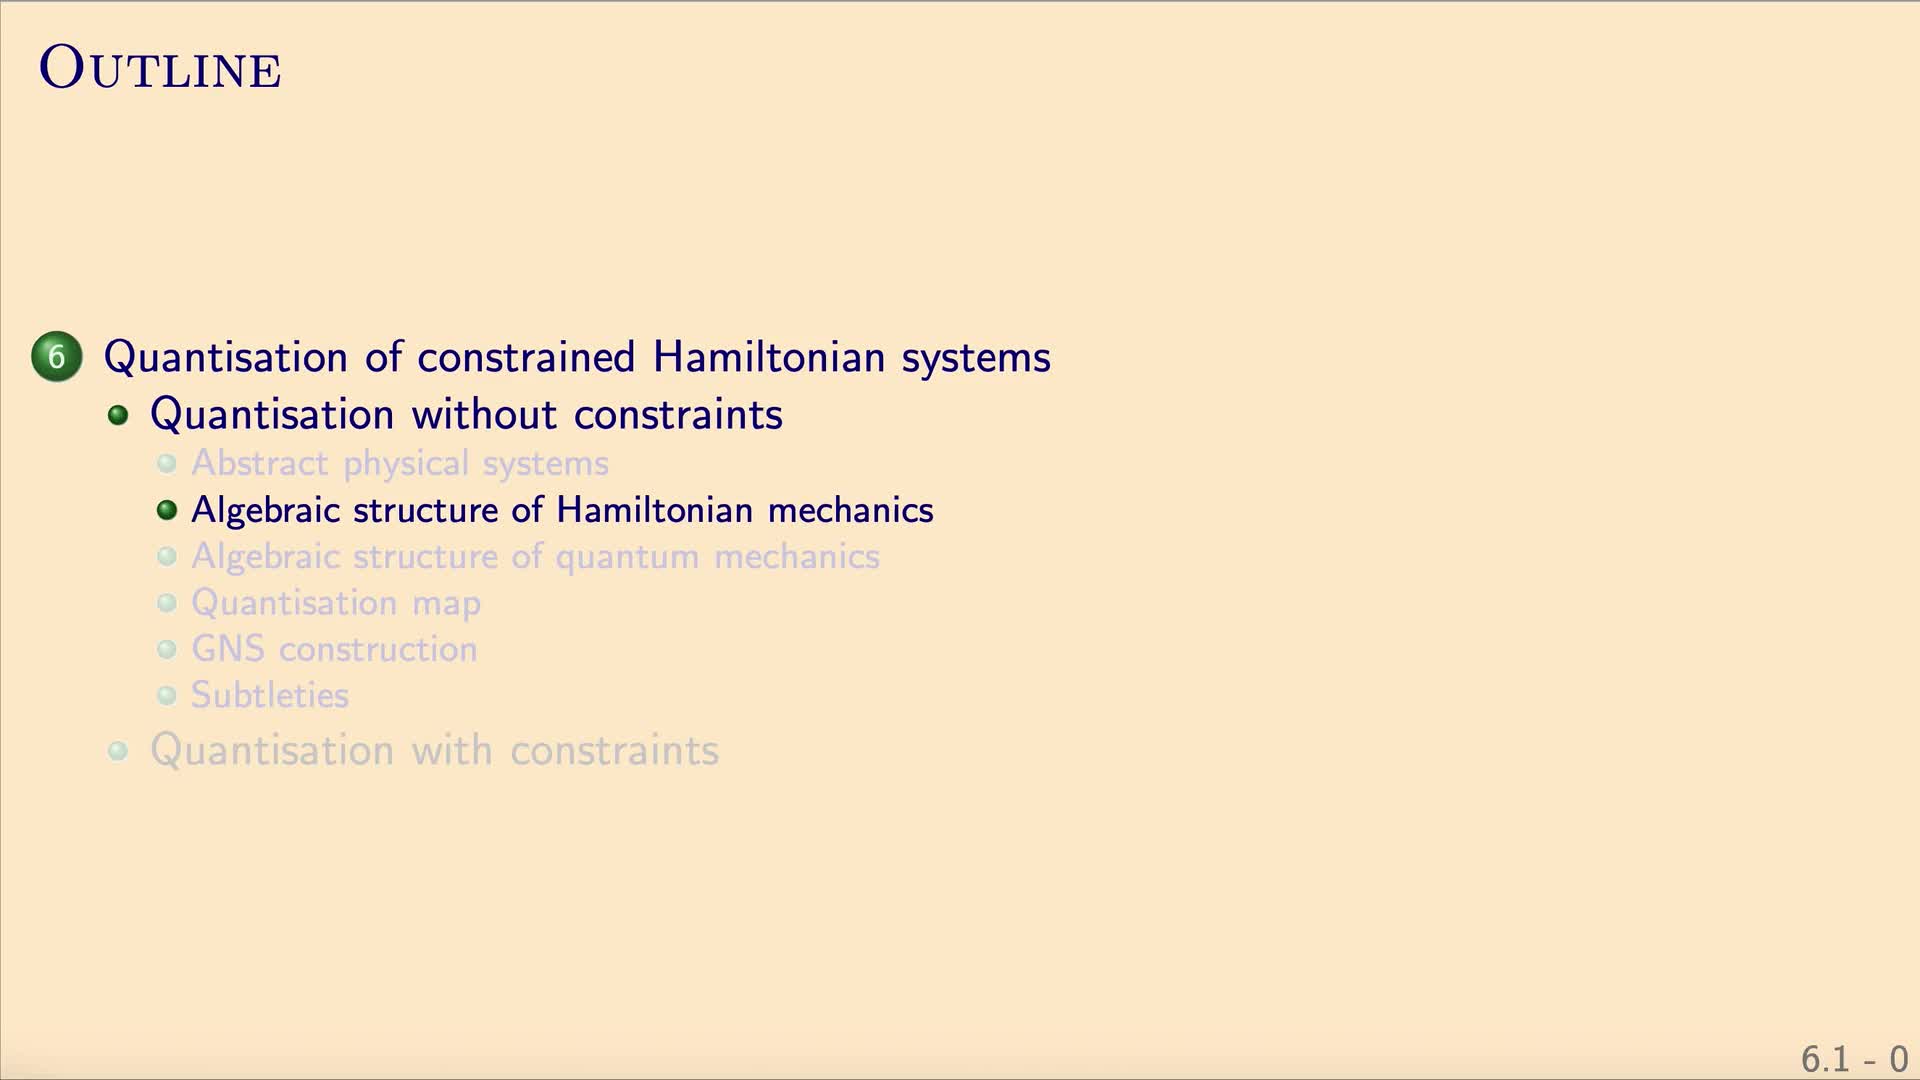 QG II: 6.1.2 - Abstract structure of Hamiltonian mechanics